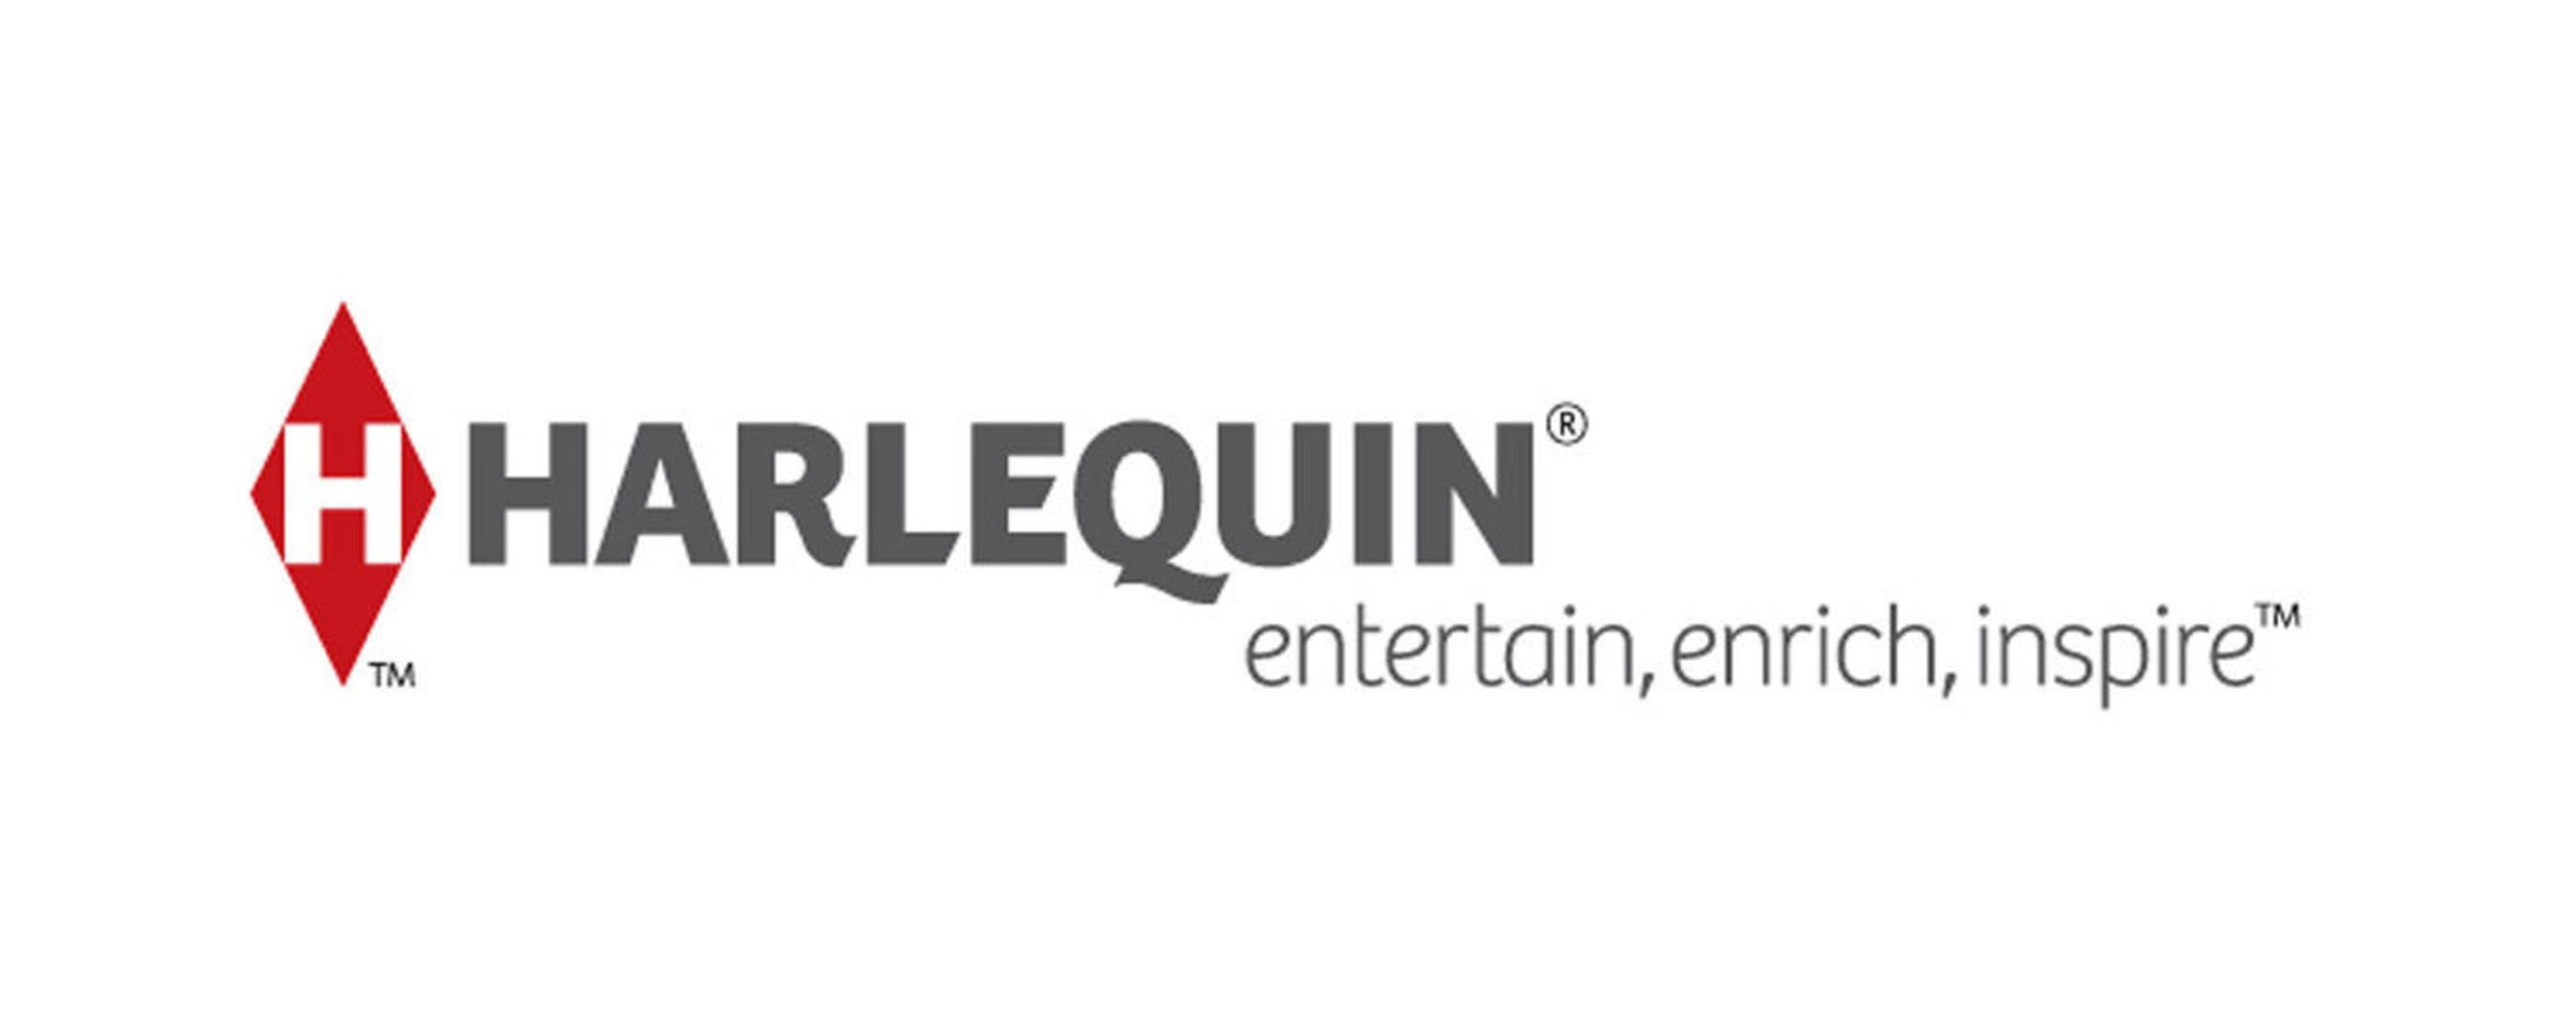 Harlequin logo.